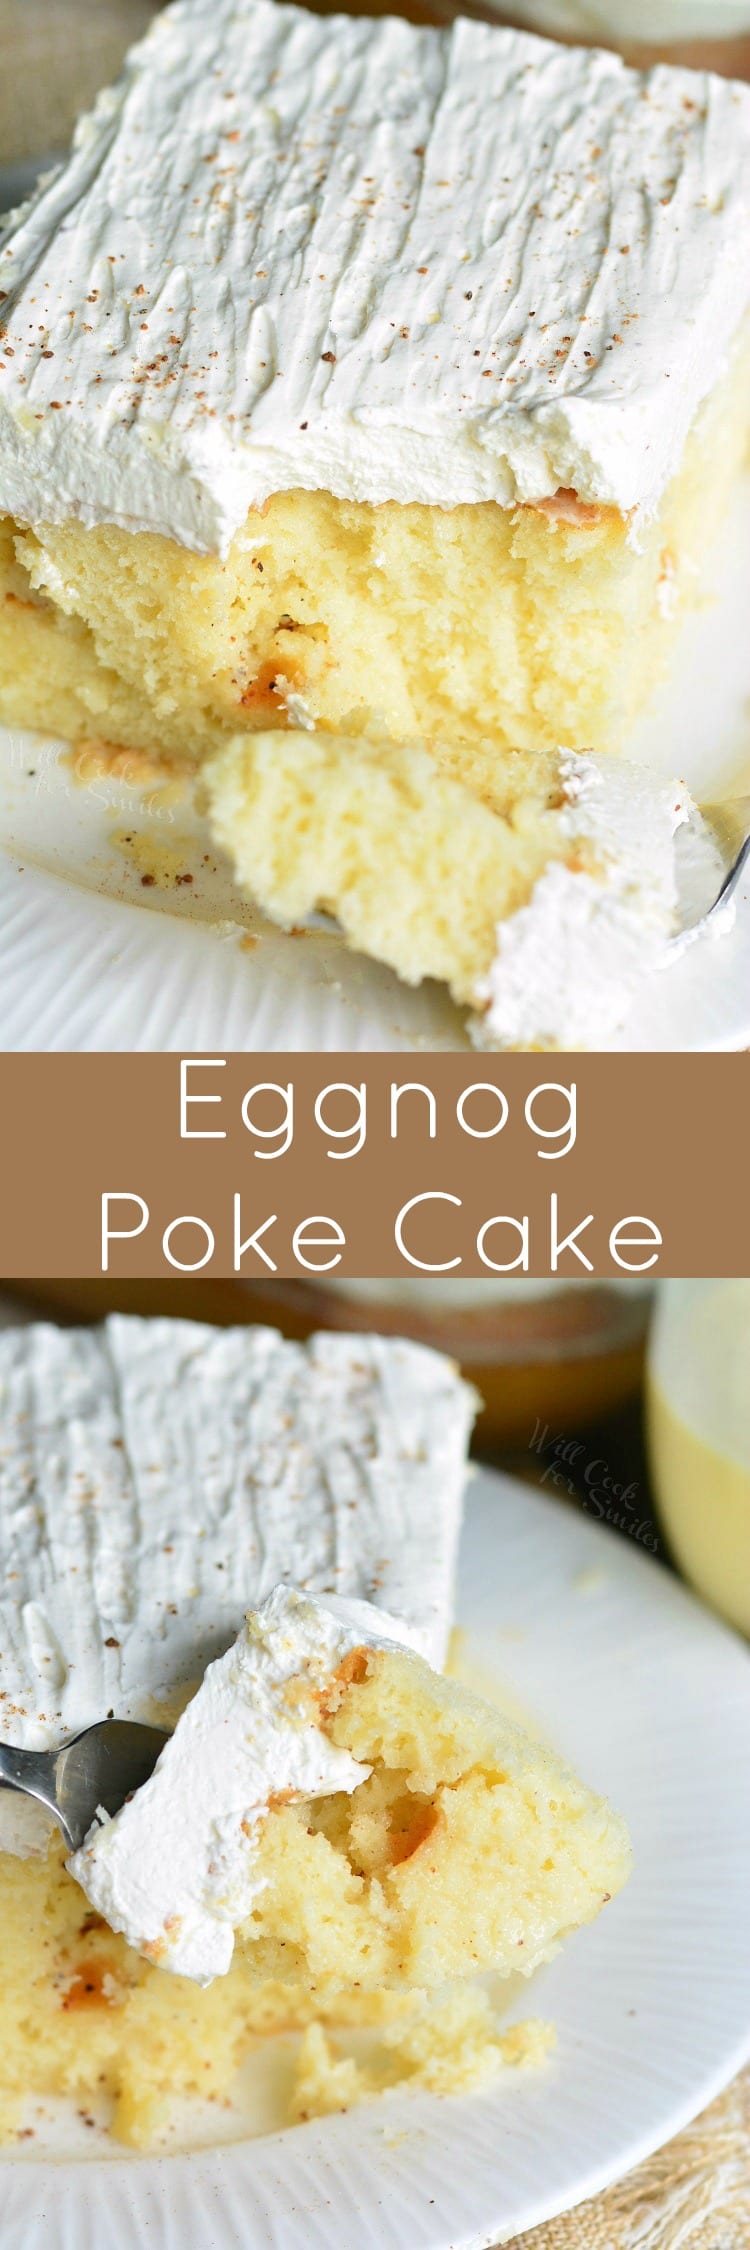 Eggnog Poke Cake on a plate collage